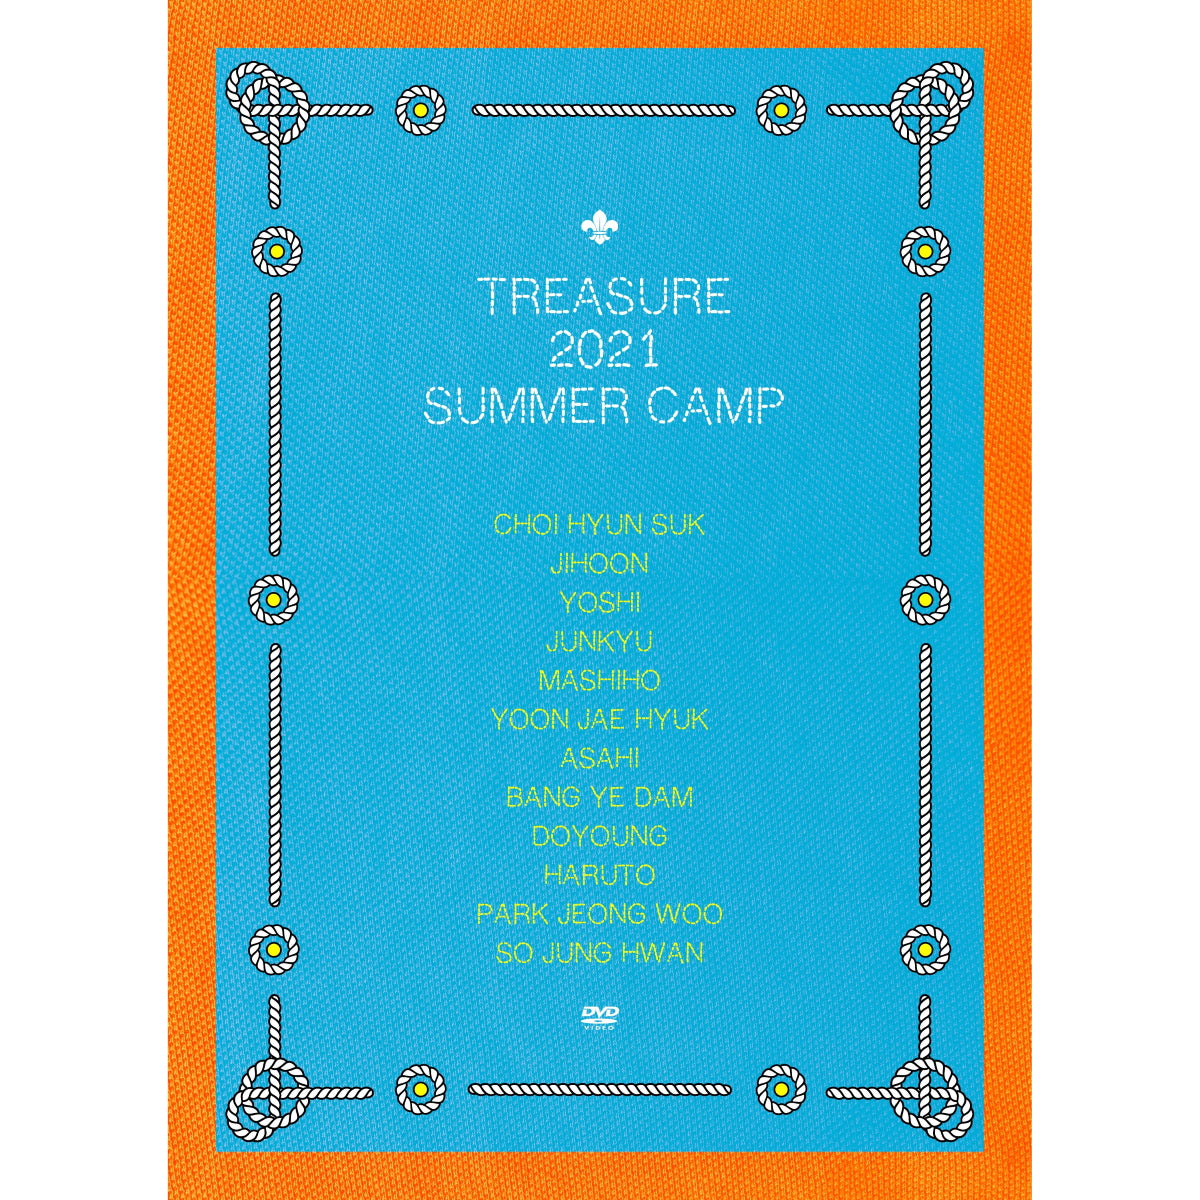 Summer 2021 treasure camp Summer Camp